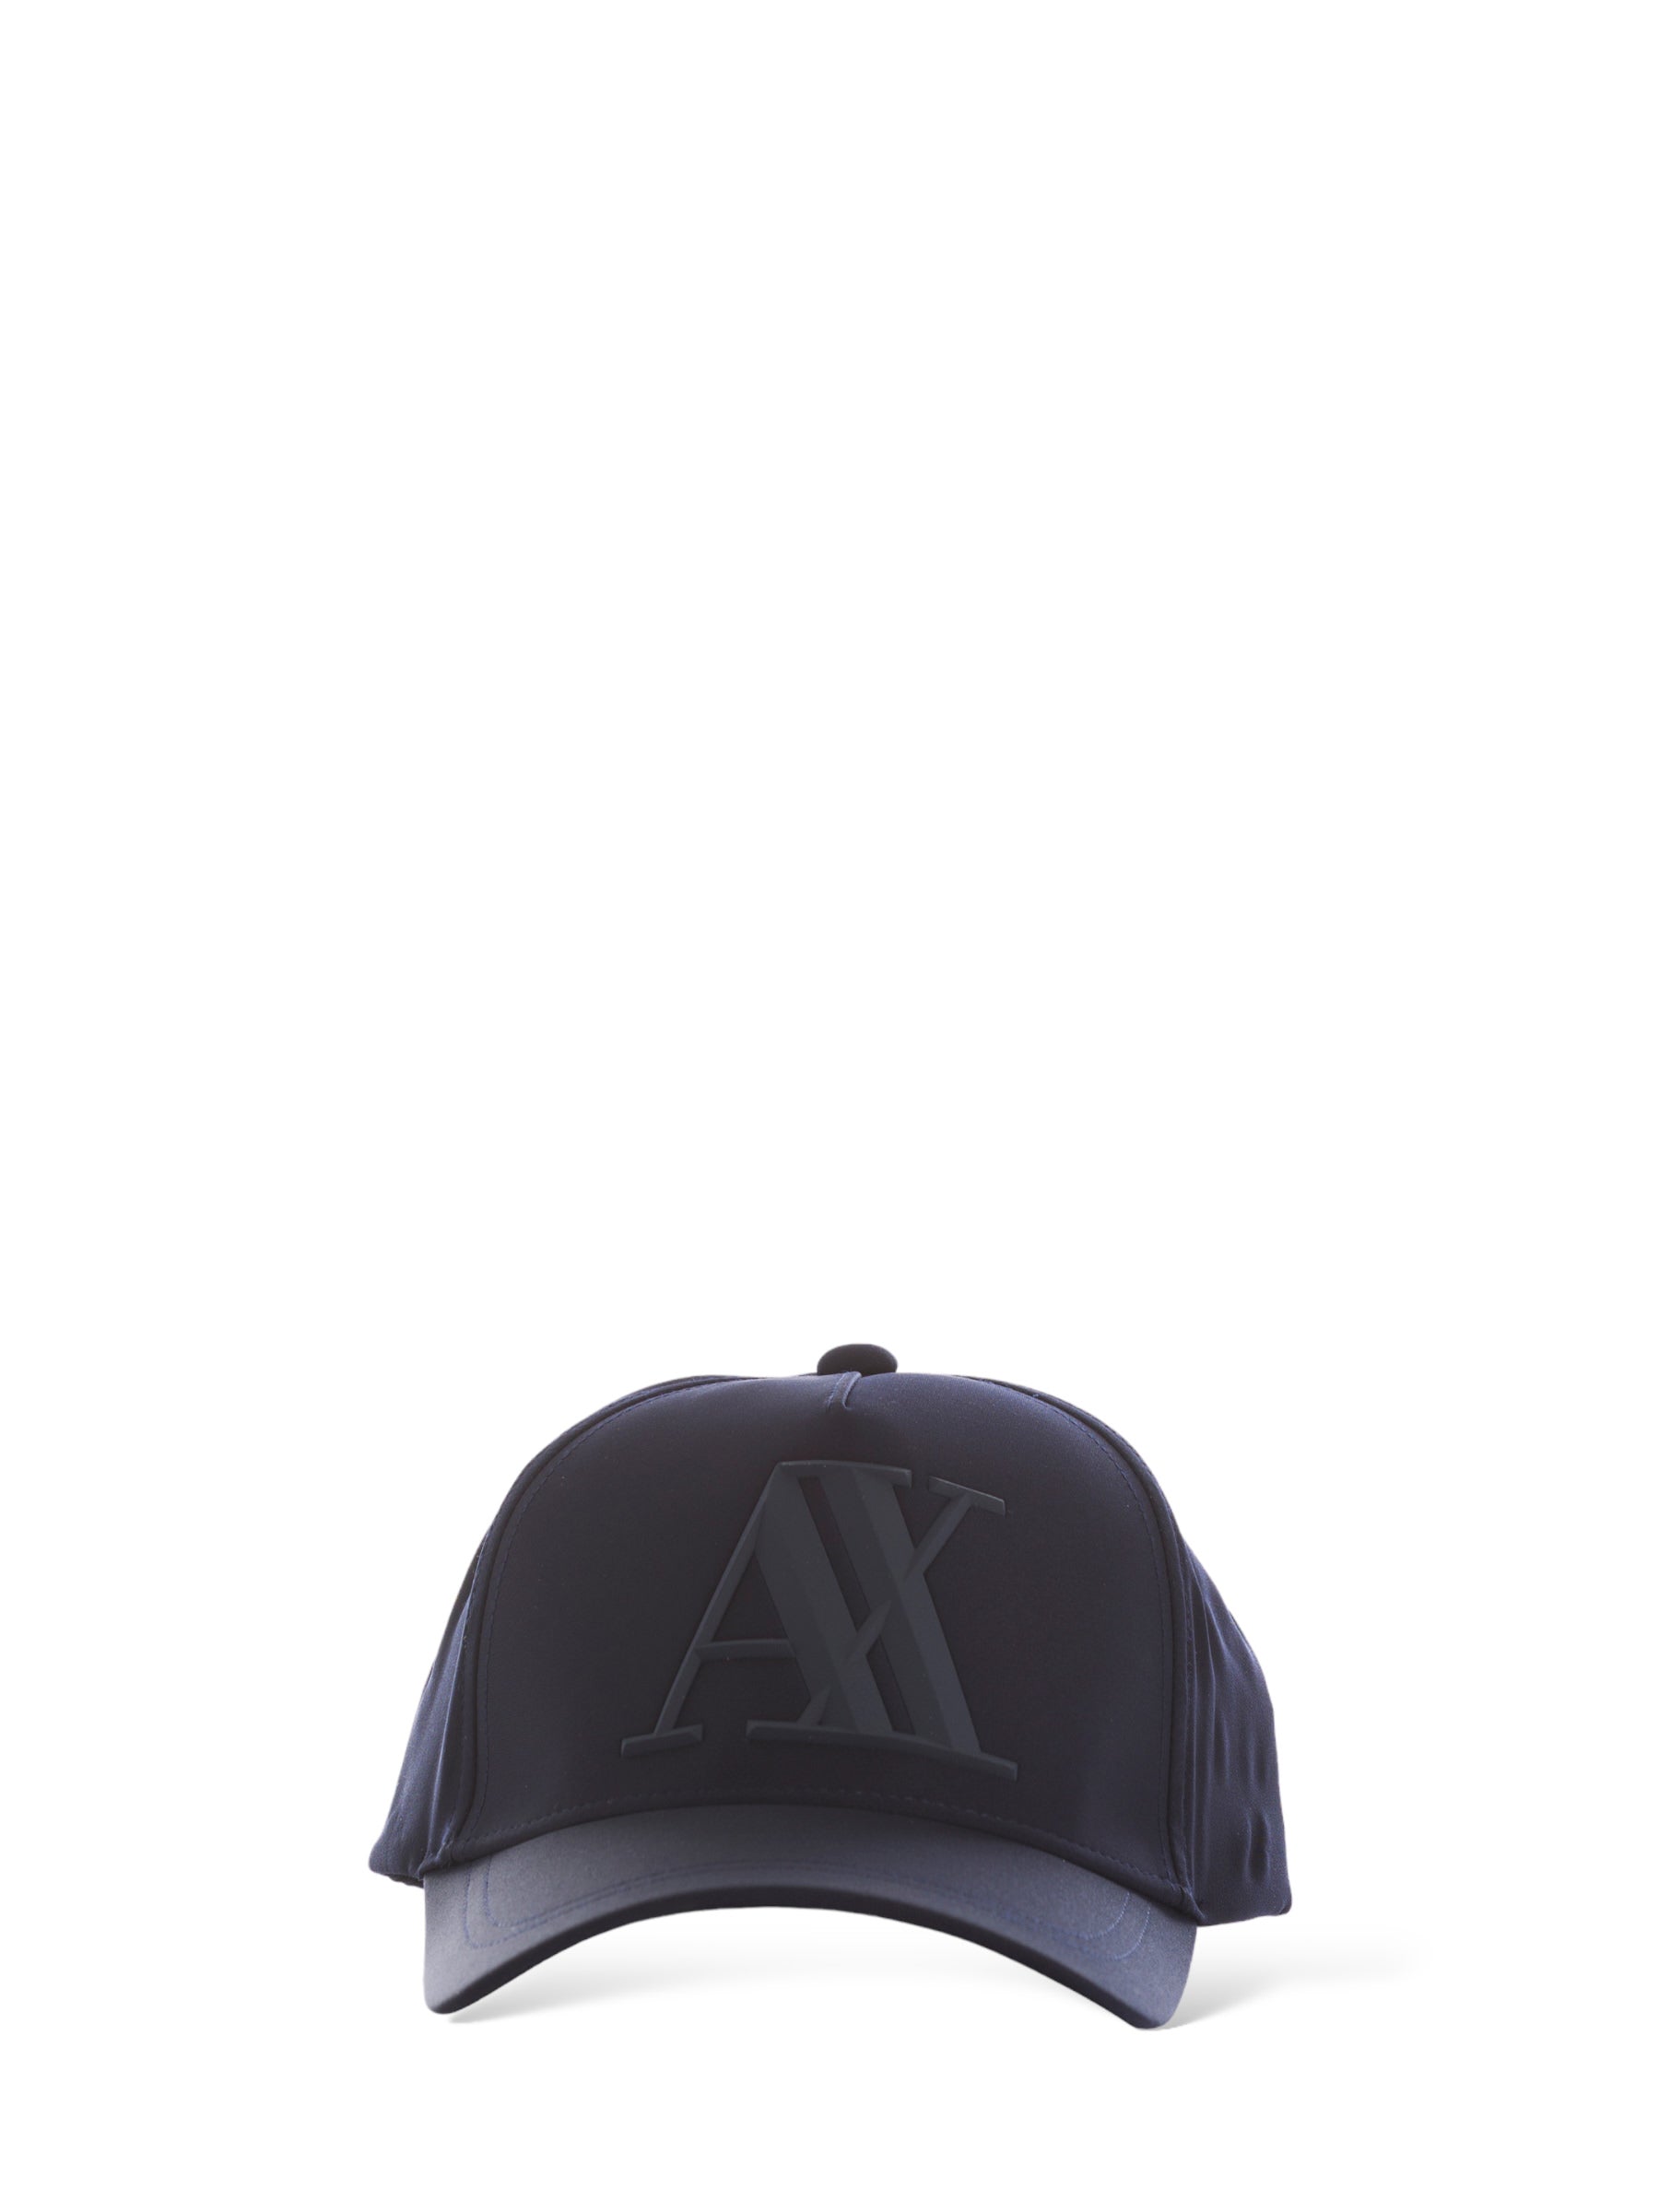 Baseball Hat 954079 Navy